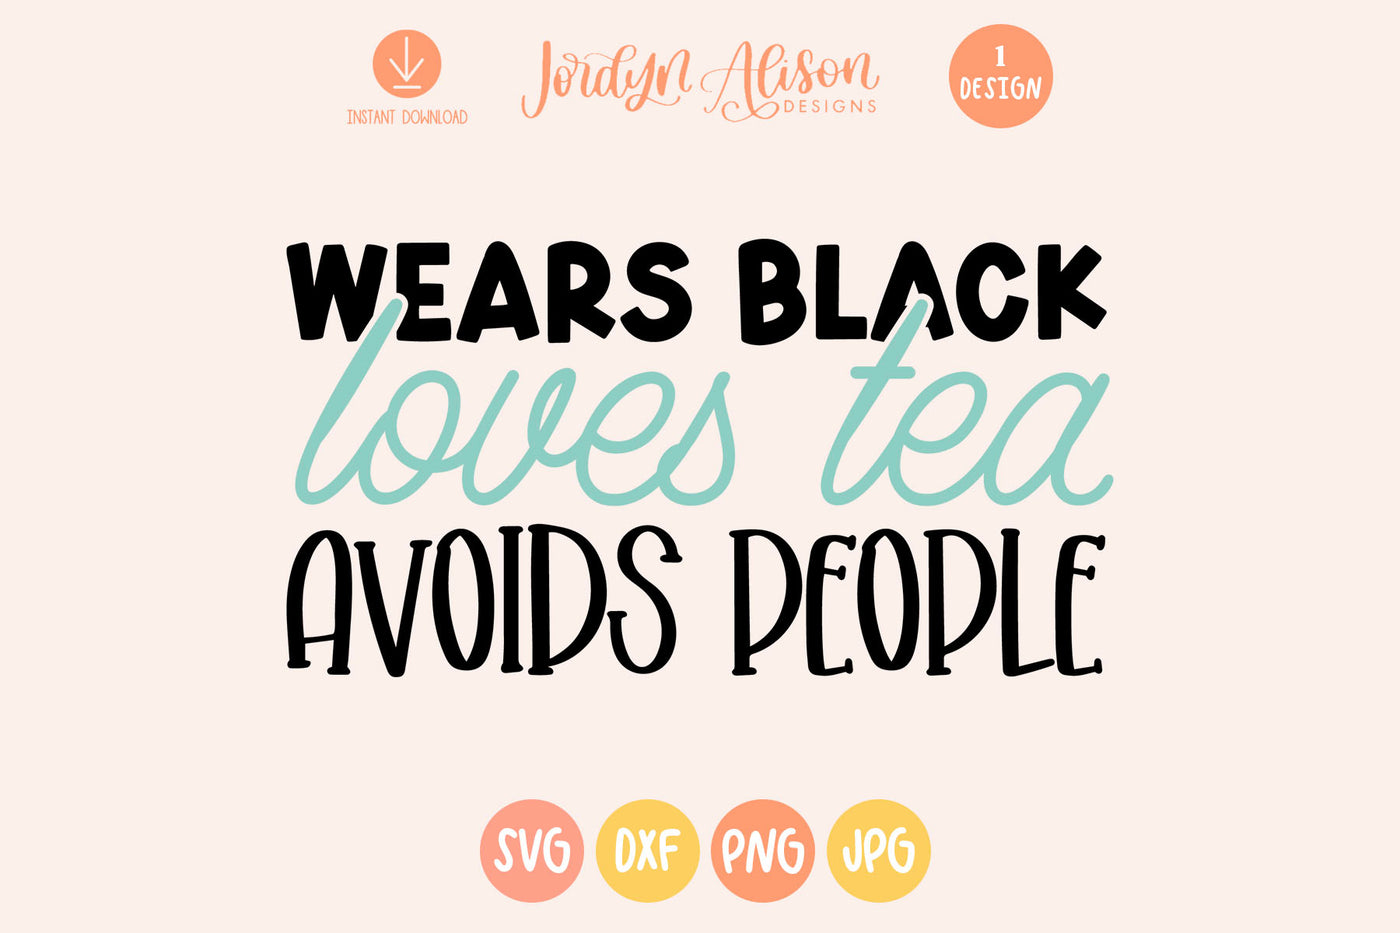 Wears Black Loves Tea Avoids People SVG